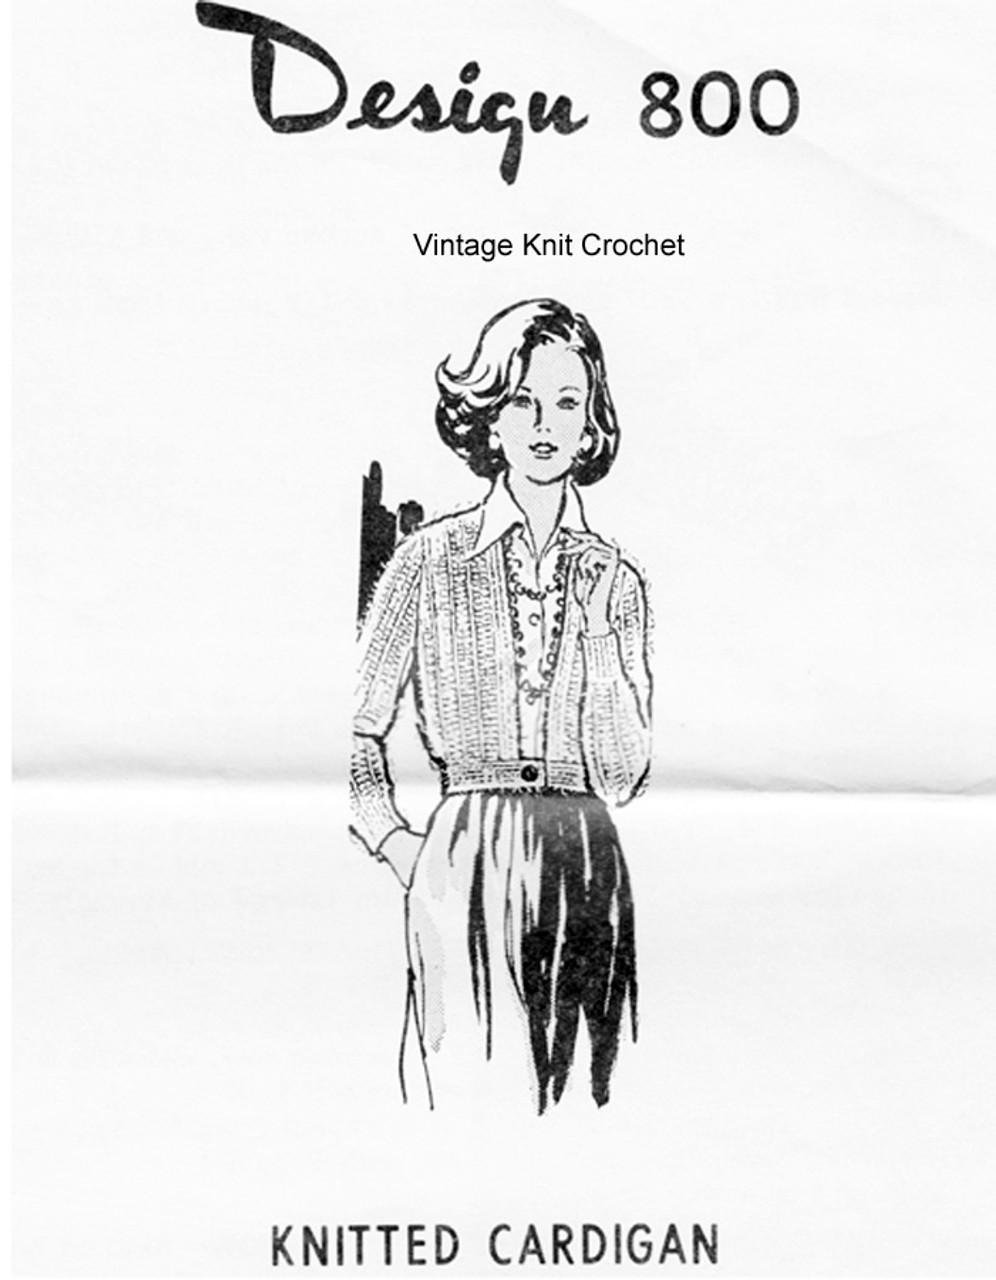 Cardigan Knitting Pattern, Waist Band, Mail Order Design 800